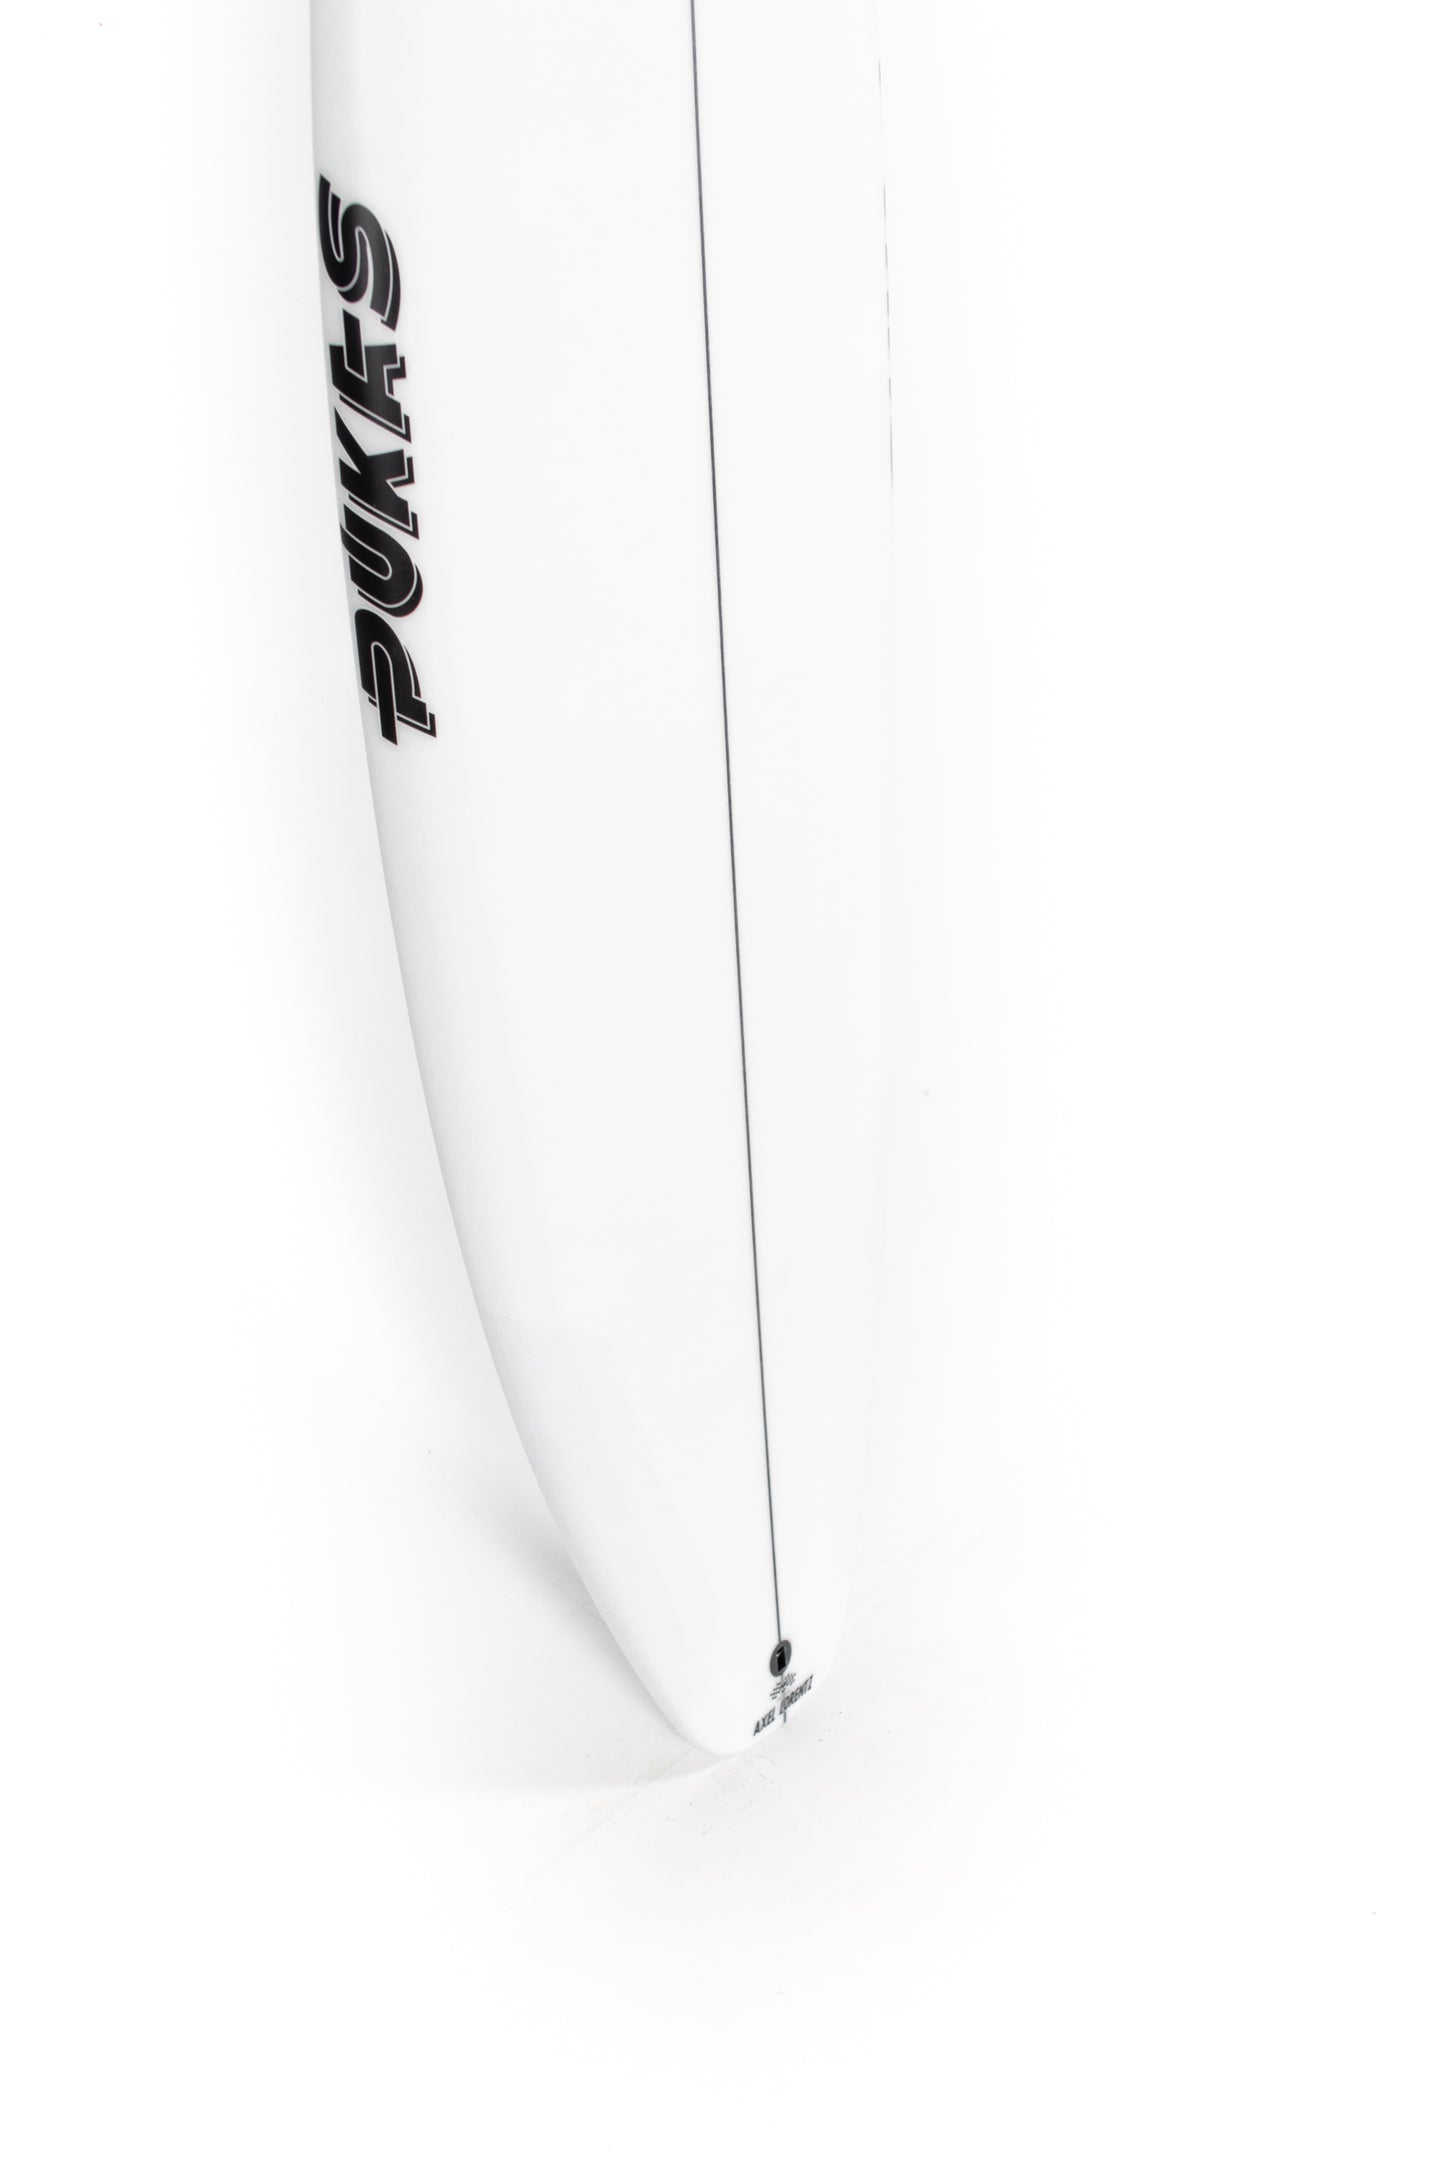 
                  
                    Pukas Surf Shop - Pukas Surfboard - TASTY TREAT ALL ROUND by Axel Lorentz - 6'1" x 19.75 x 2.60 x 33.46L - AX08539
                  
                